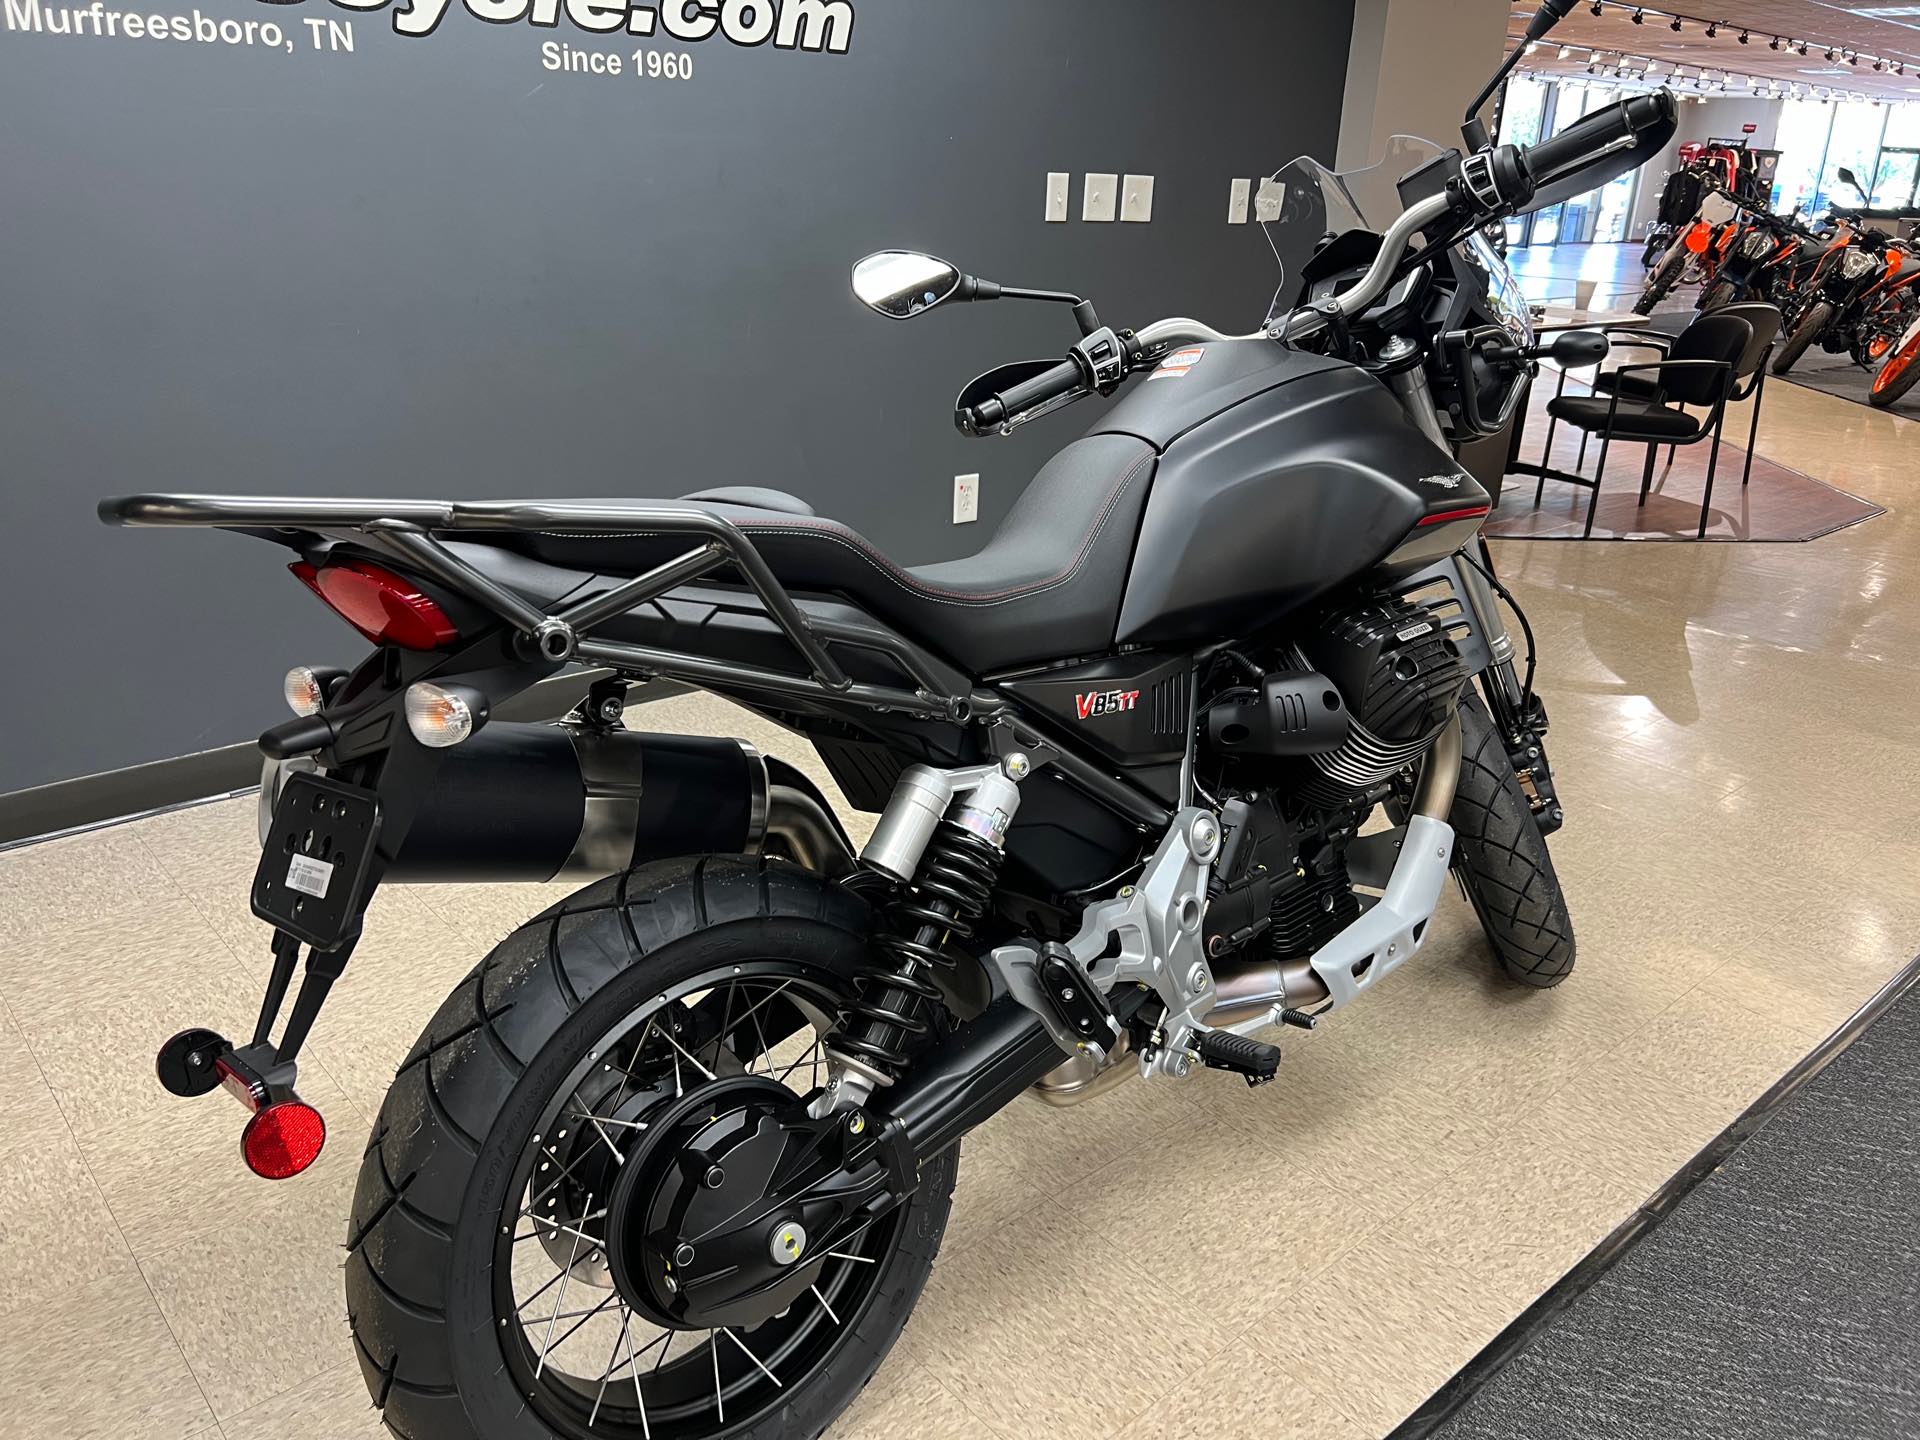 2022 MOTO GUZZI V85 TT at Sloans Motorcycle ATV, Murfreesboro, TN, 37129